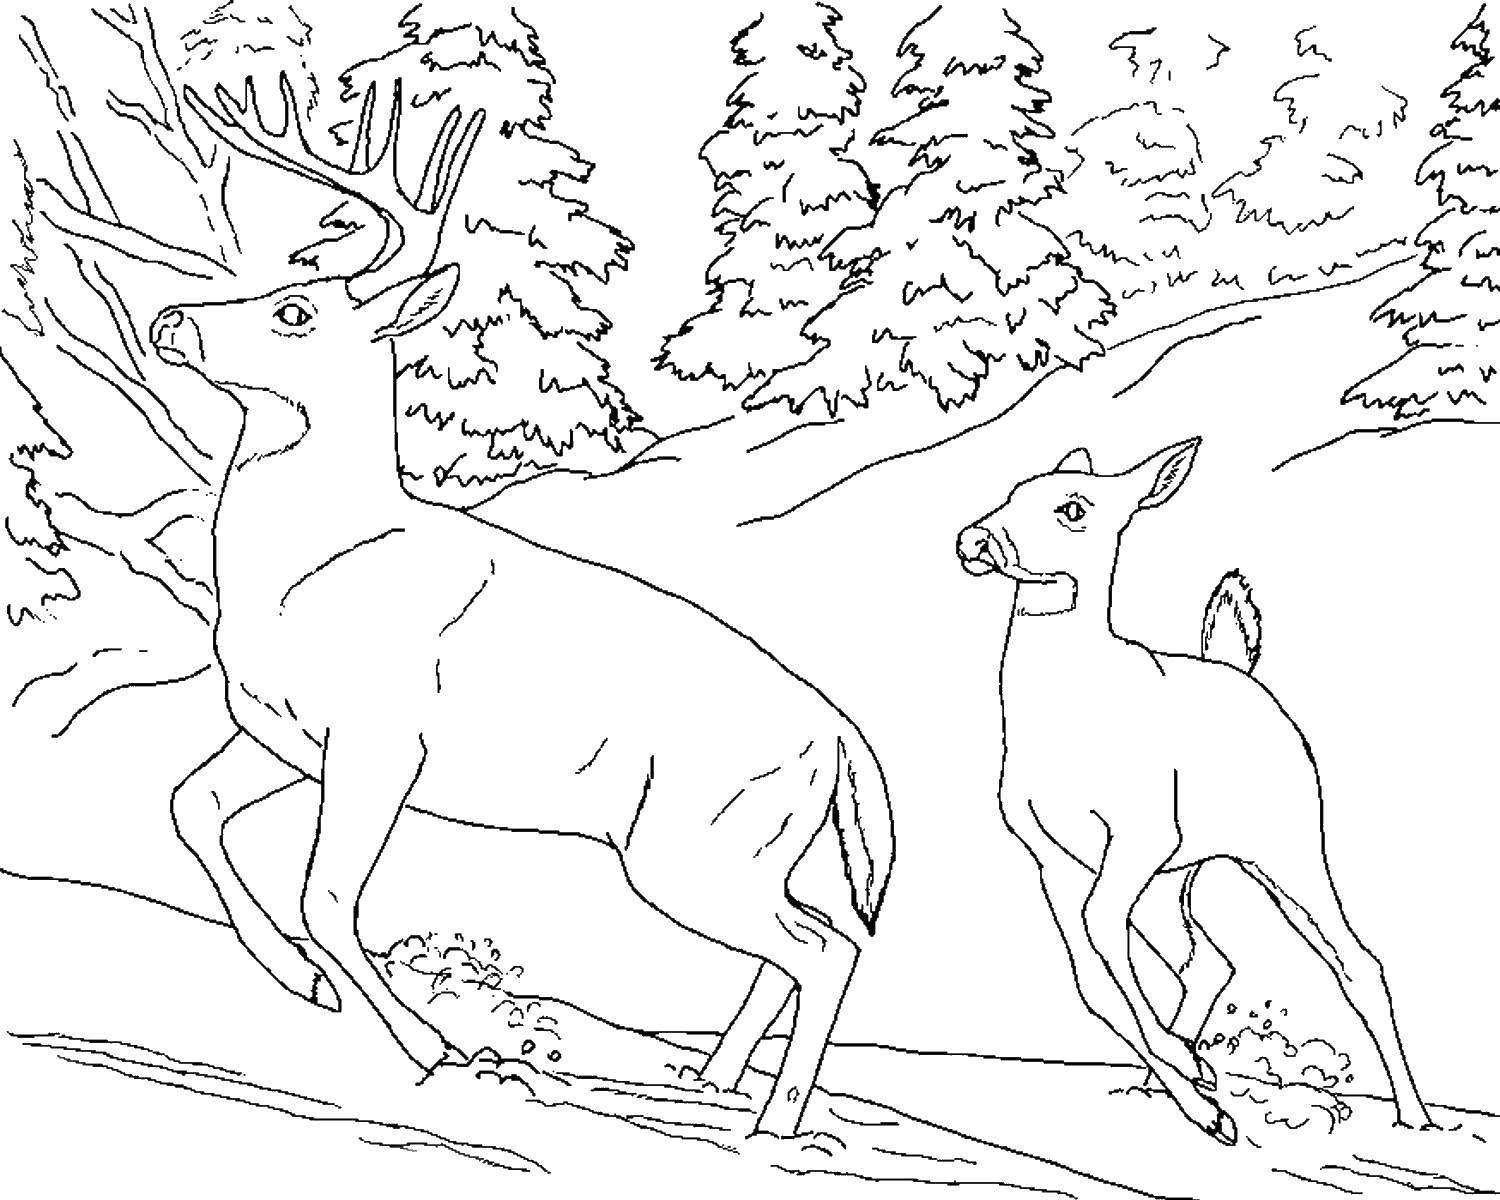 Coloring Deer vegout. Category animals. Tags:  deer.